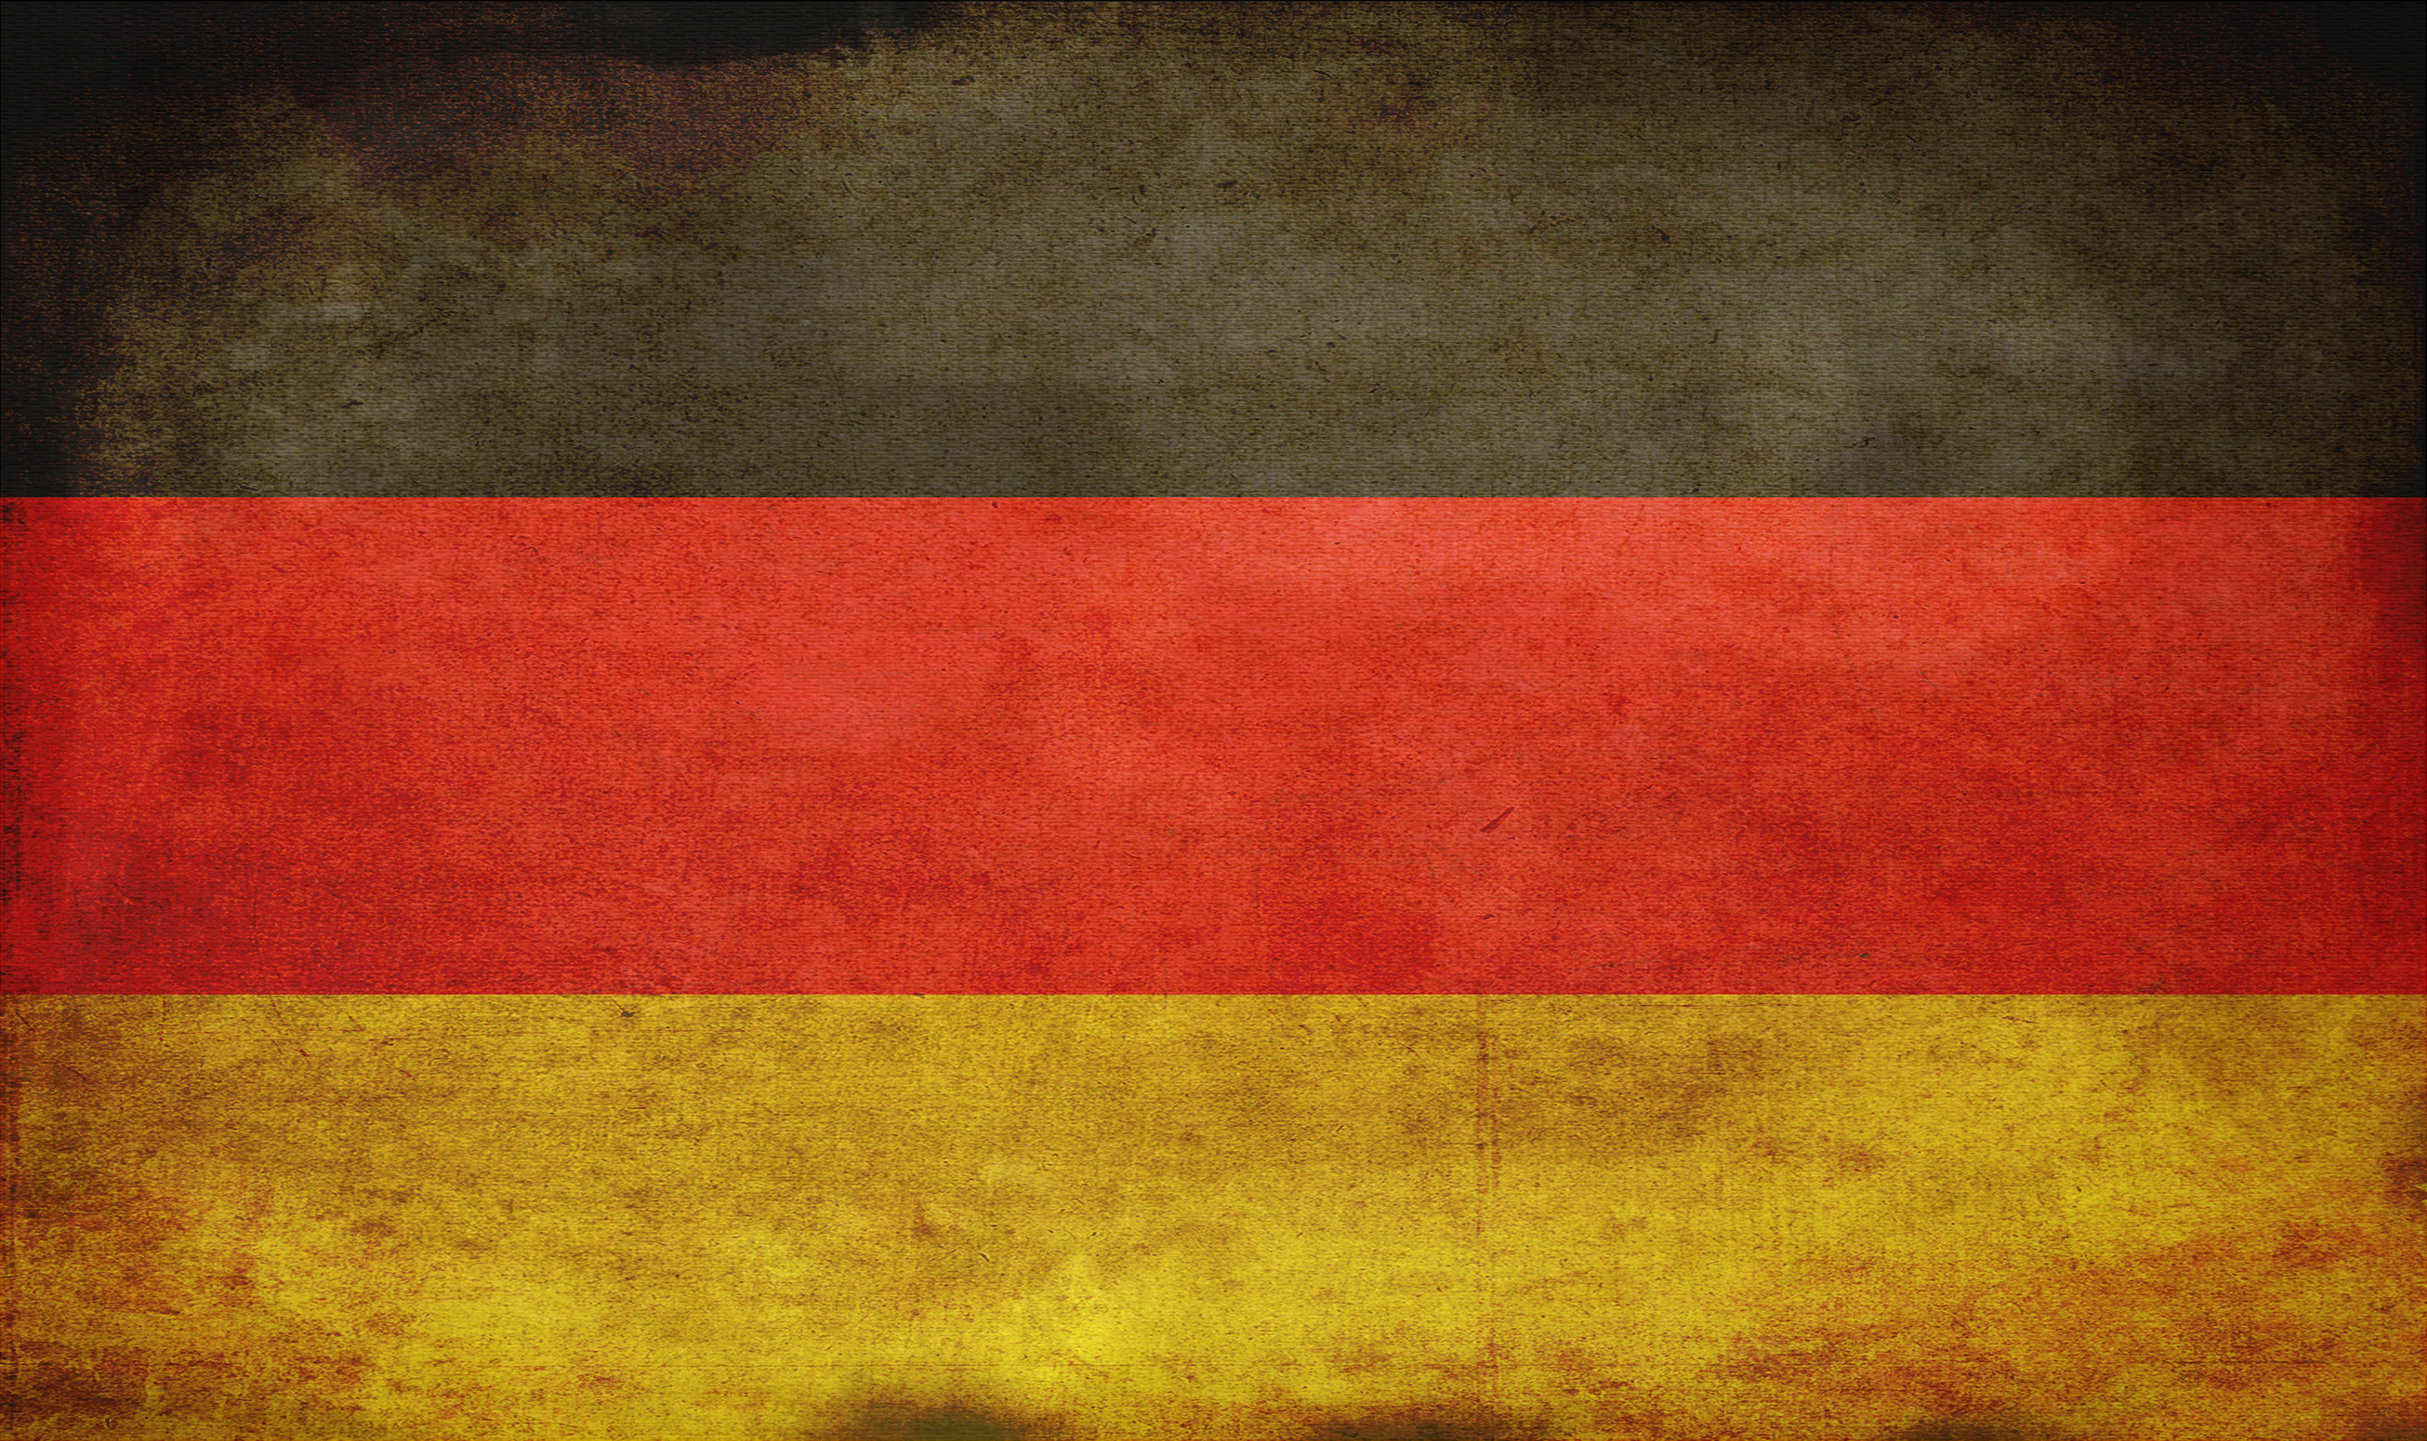 Germany - Grunge by tonemapped on DeviantArt